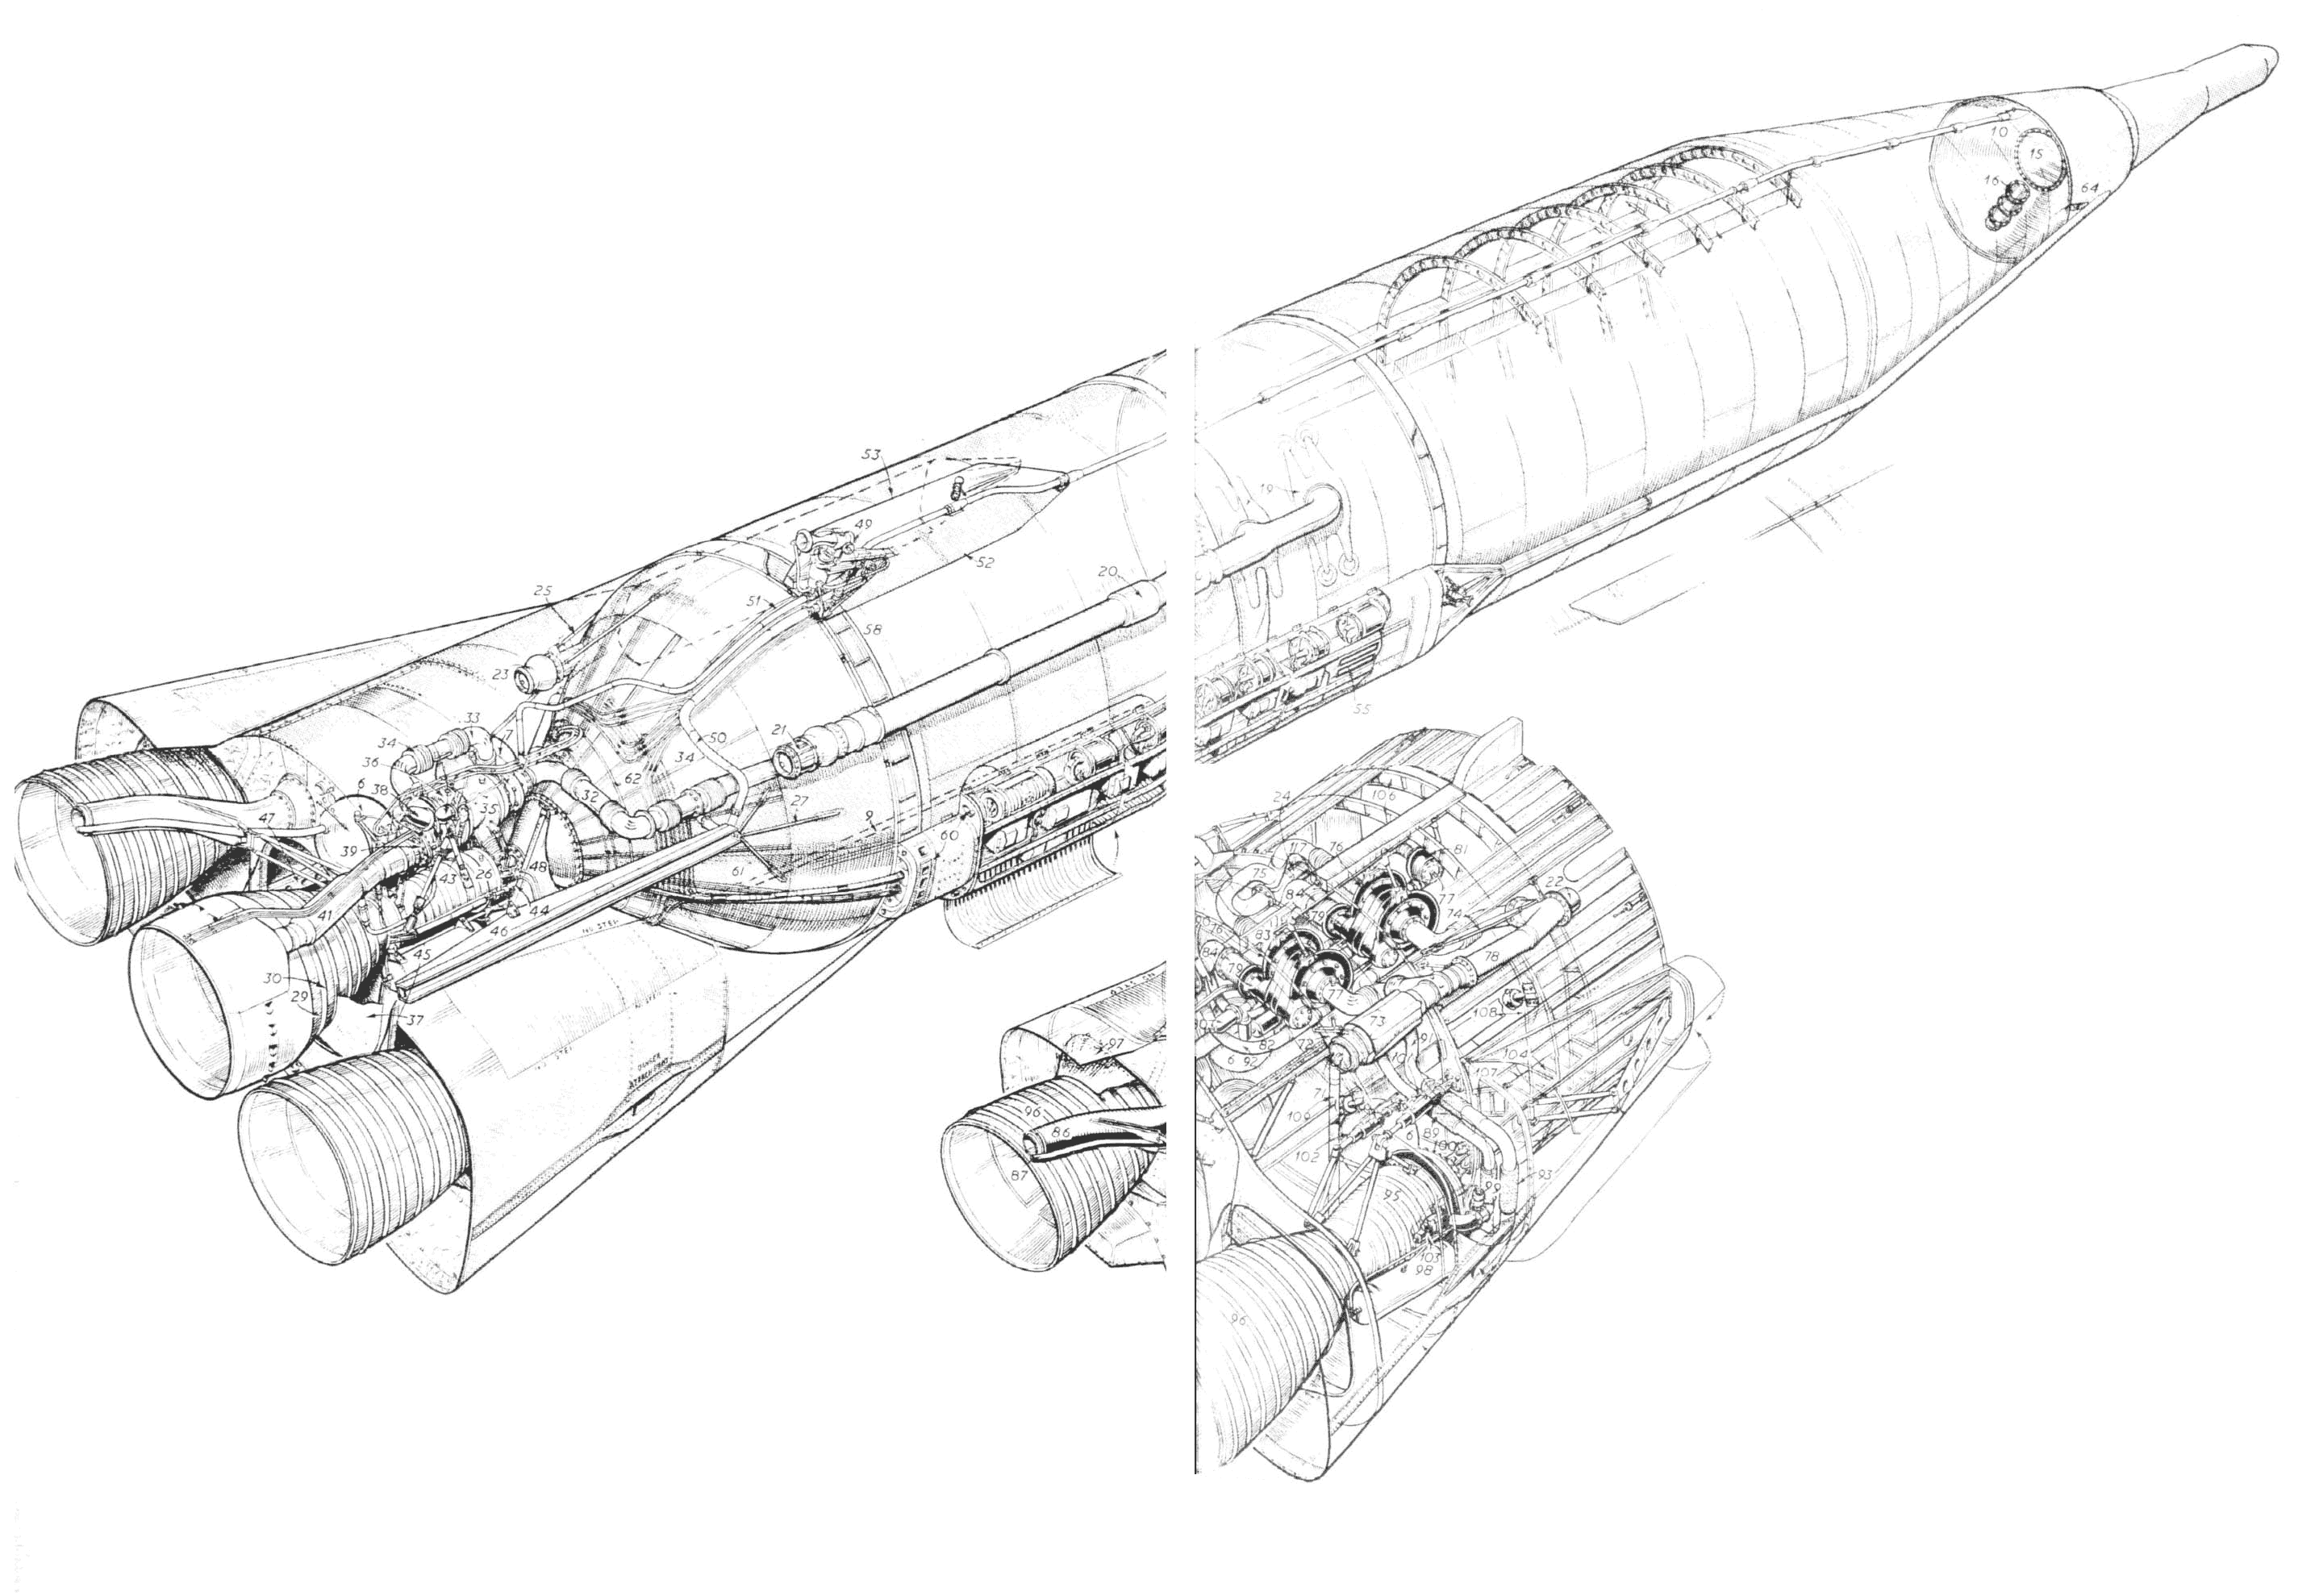 SM-65 Atlas cutaway drawing